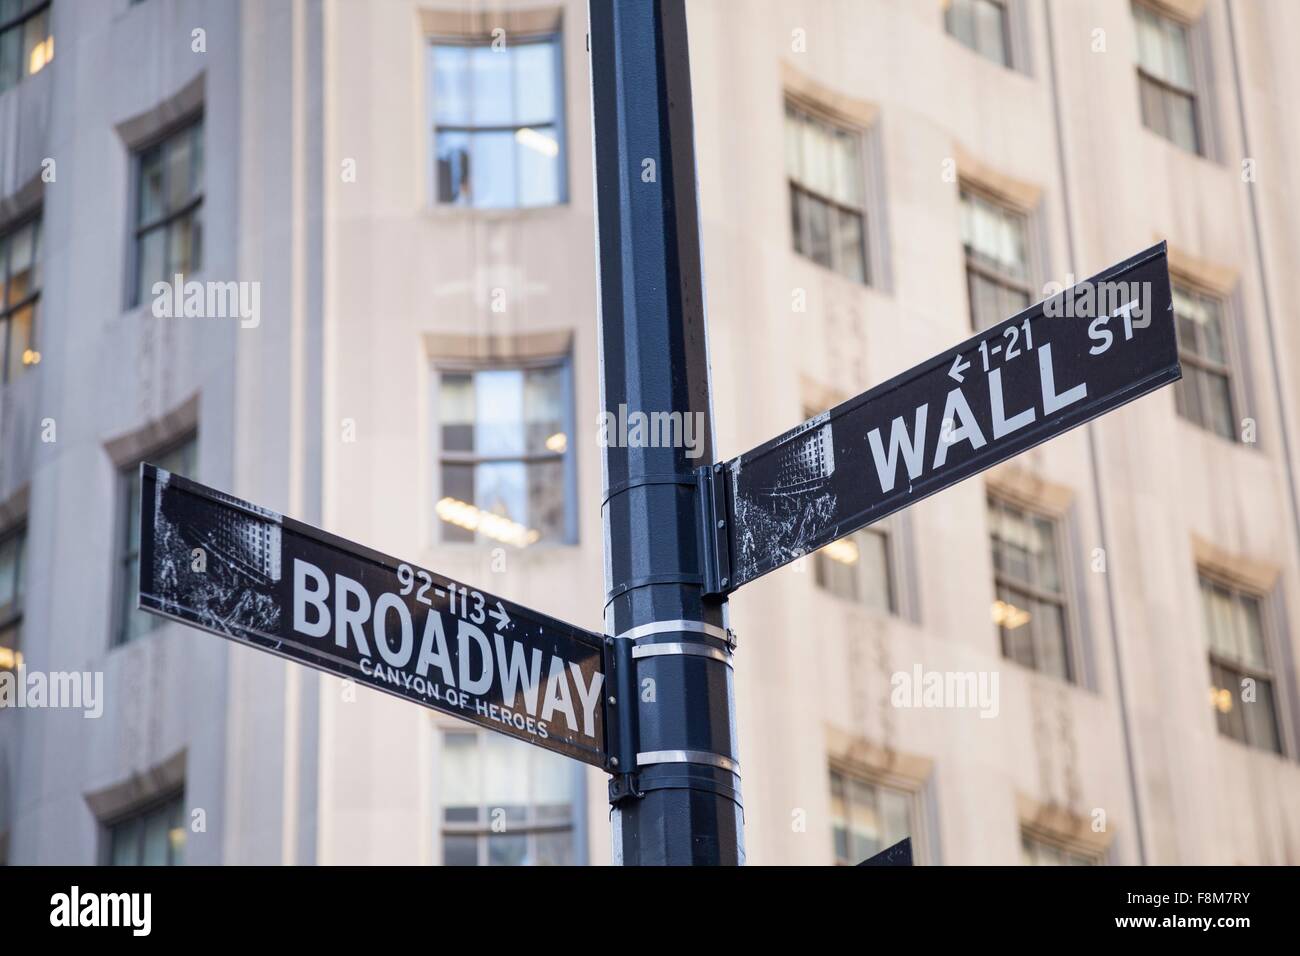 Broadway et Wall Street, street sign, New York, USA Banque D'Images